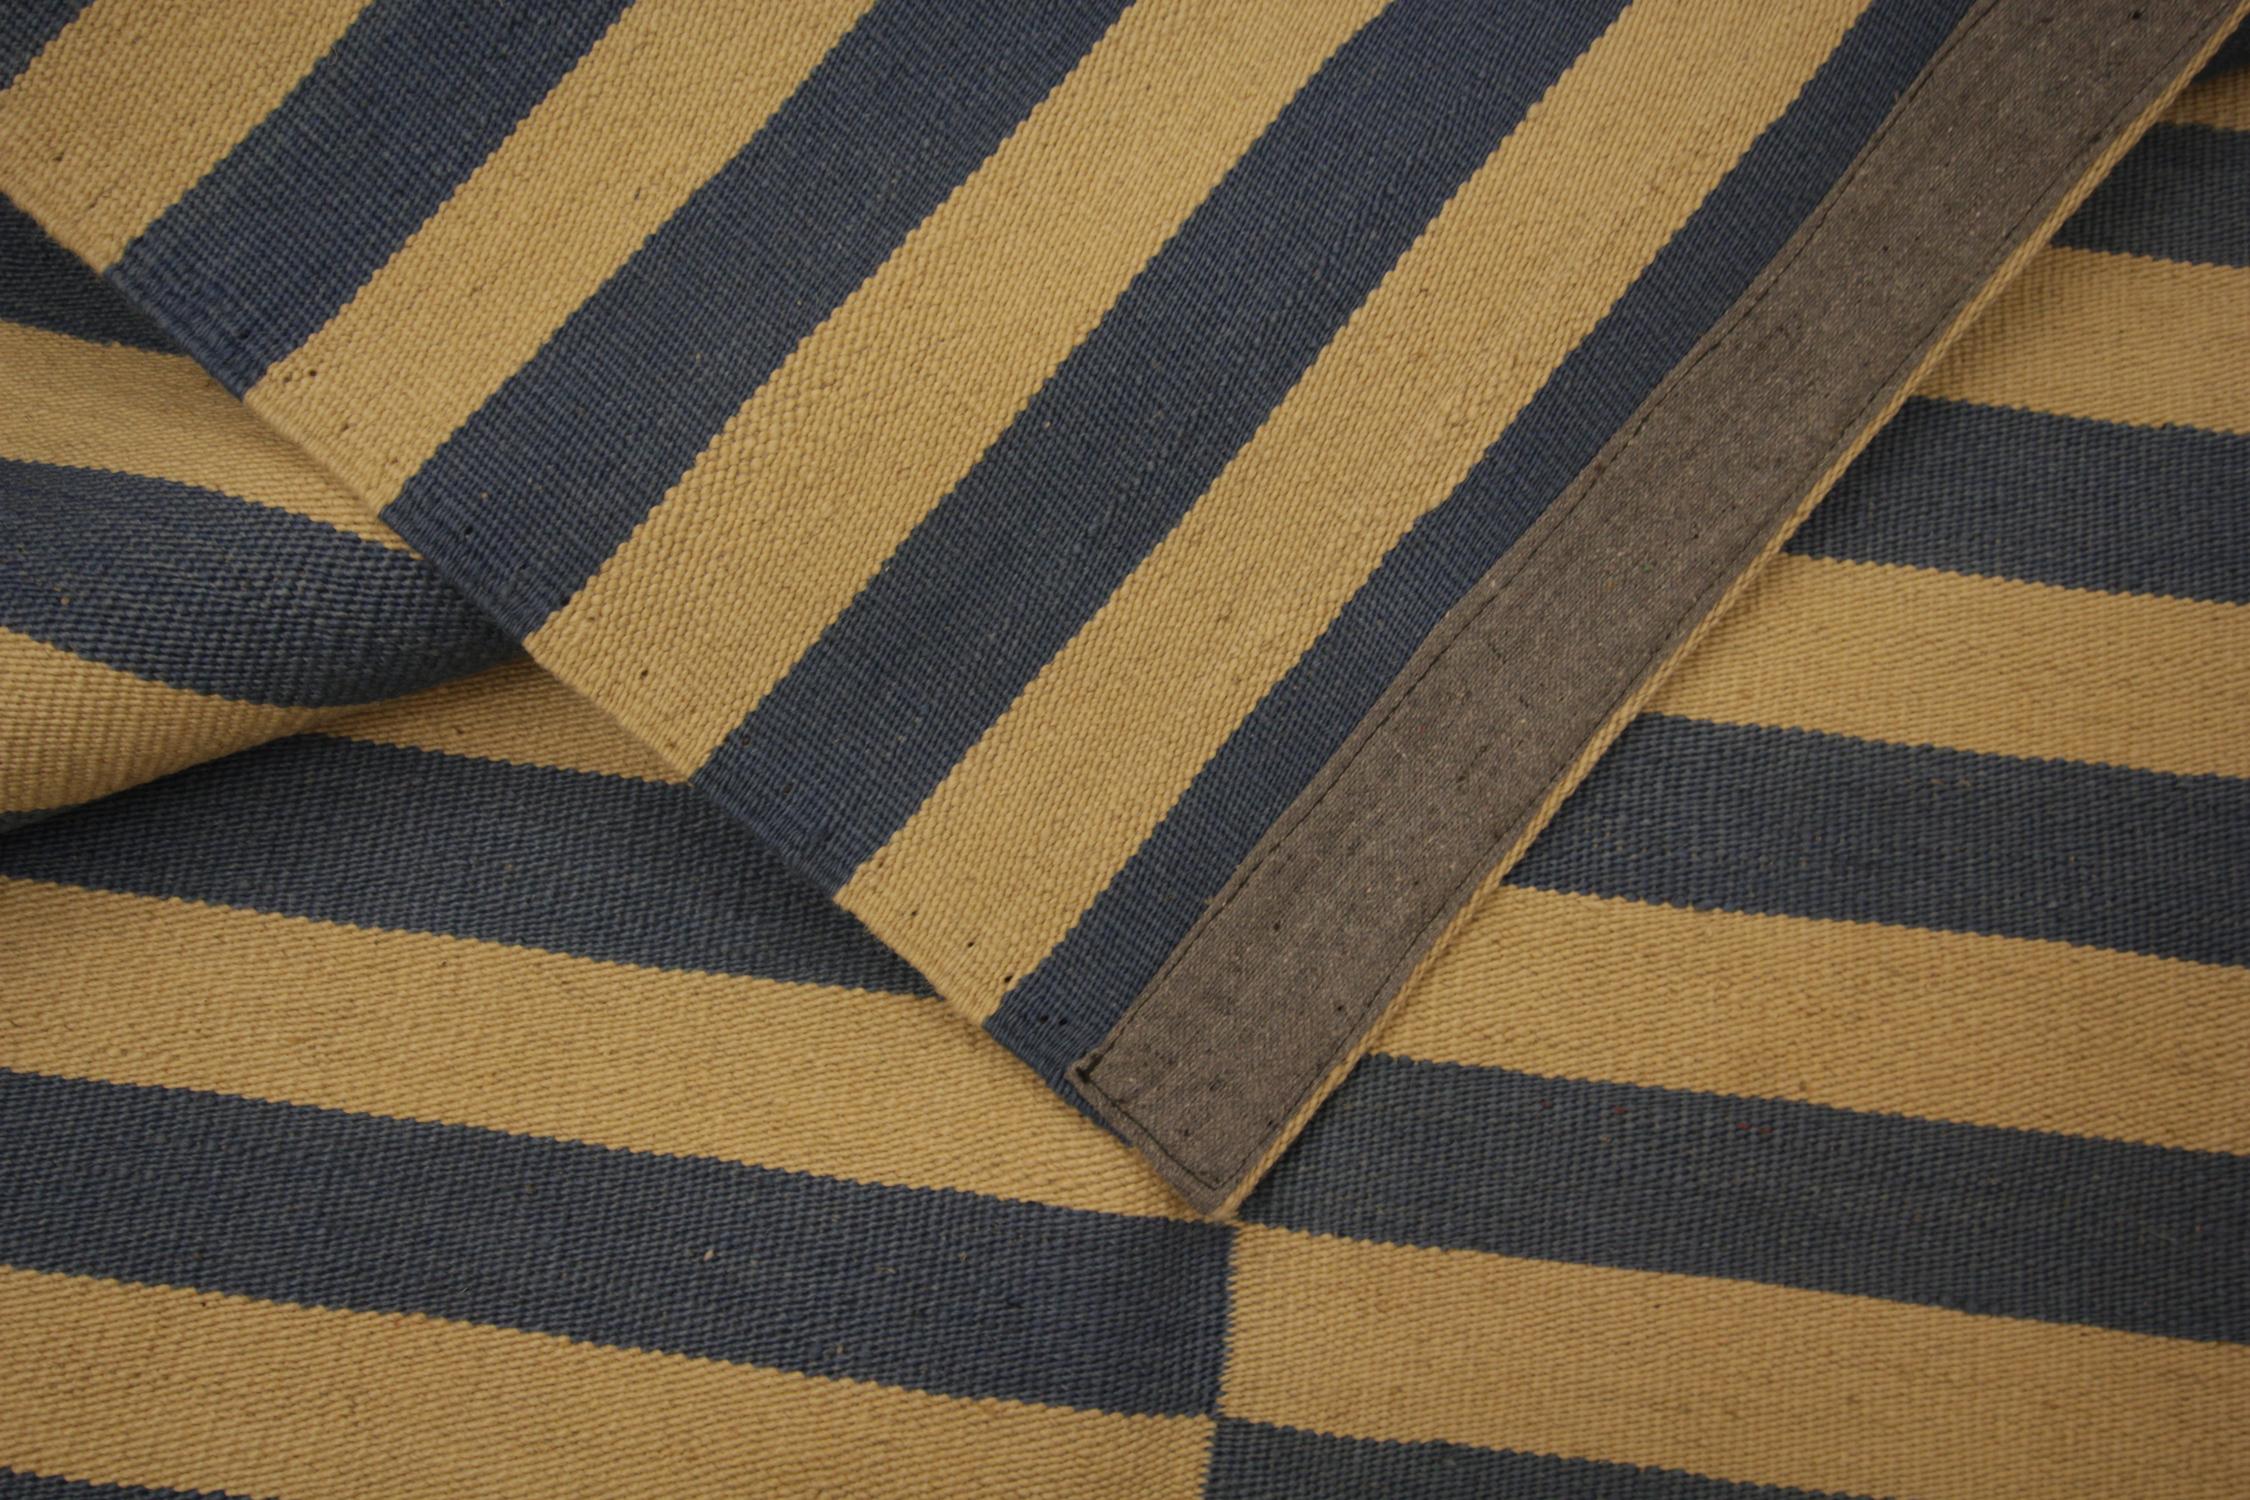 Hand-Knotted Modern Striped Kilim Rug, Blue Cream Wool Handwoven Carpet Kilims